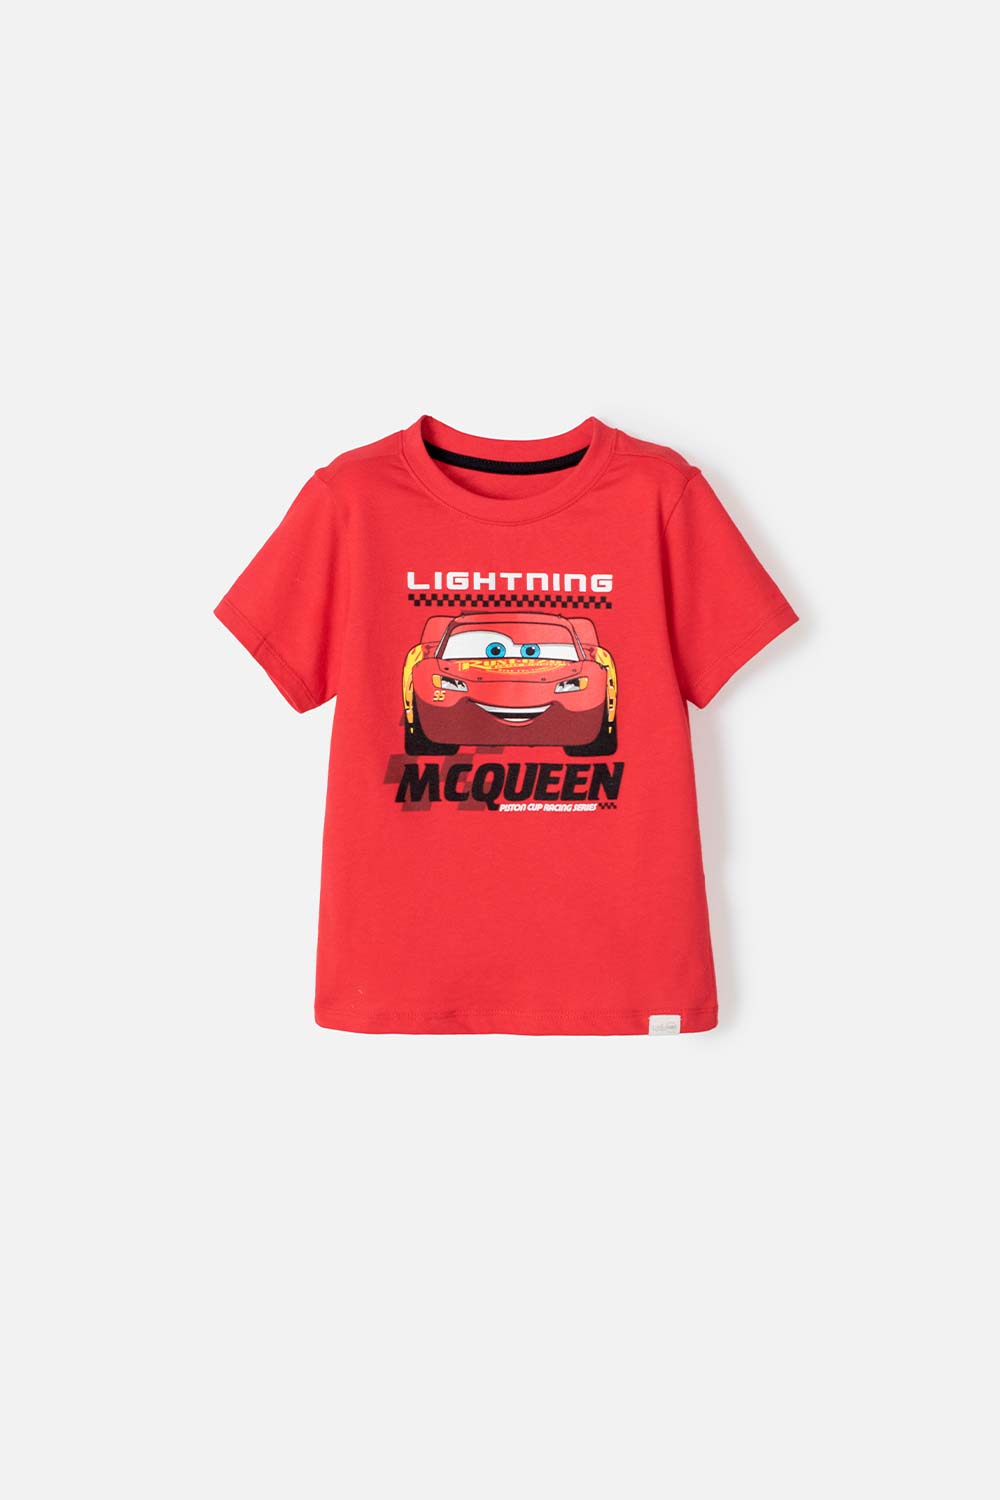 Camiseta metálica roja camiseta metálica, camiseta para niños pequeños,  camiseta para bebés, camiseta para niños, camiseta para niñas, camisa de  disfraces, camiseta para bebés, camiseta para niños pequeños, camiseta roja  